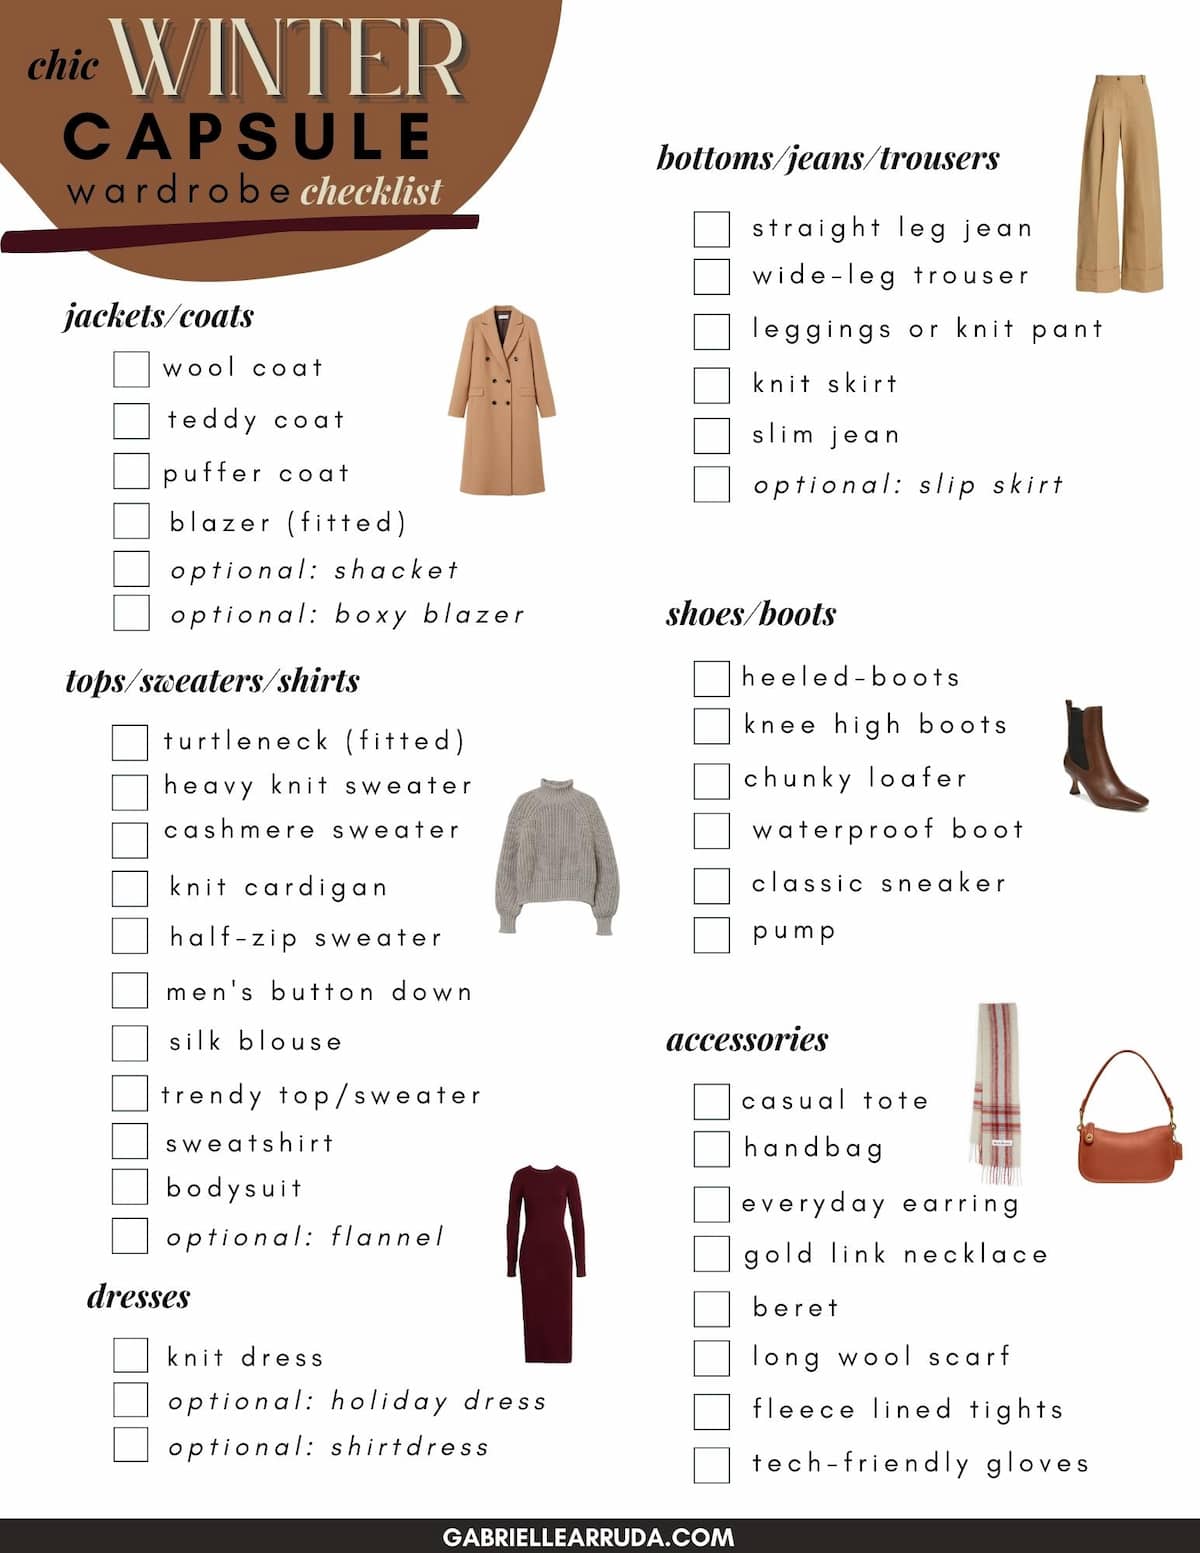 winter capsule wardrobe 2021 checklist (items listed in bullet list below)